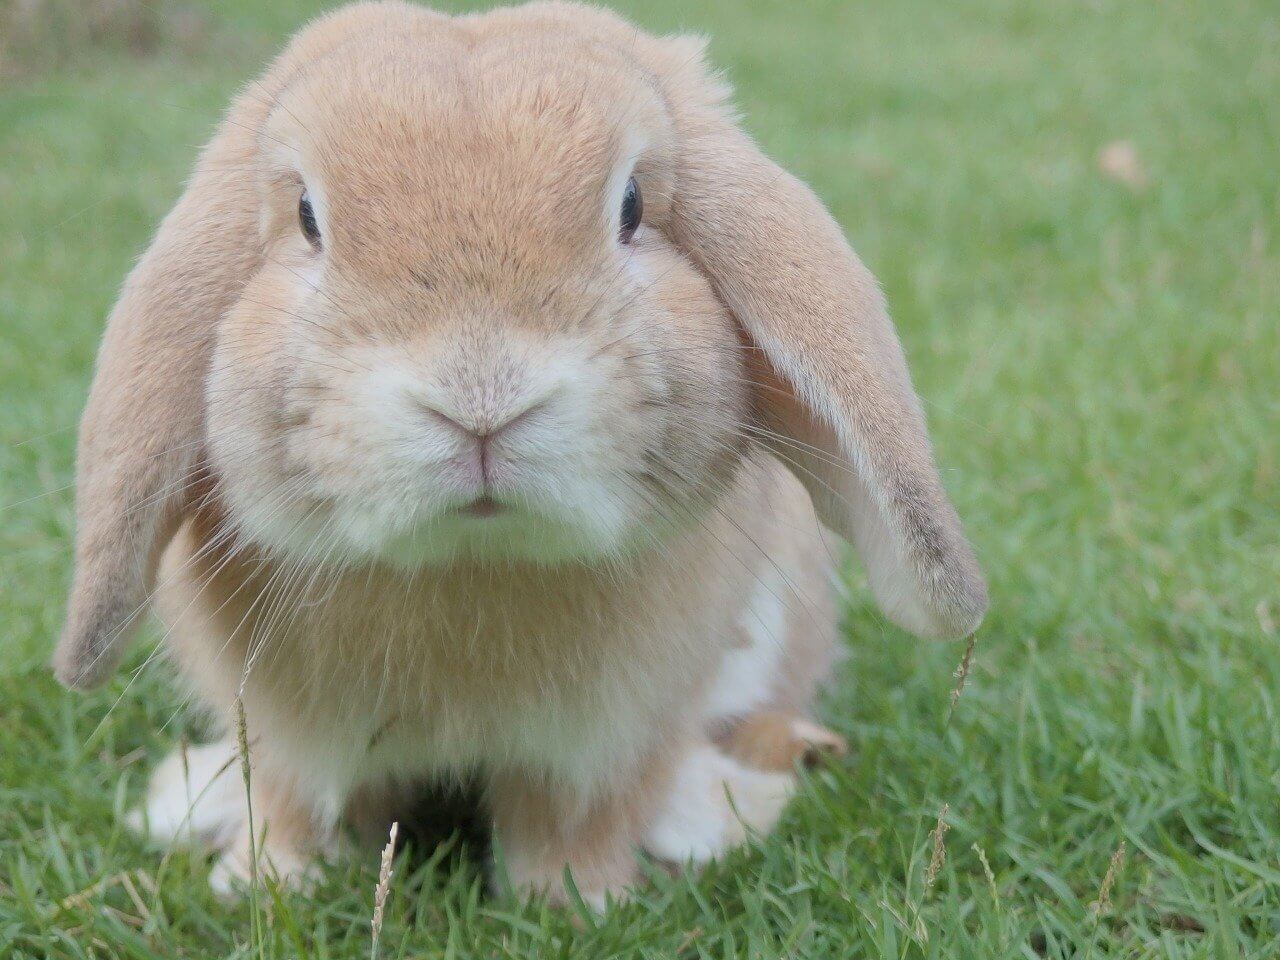 A pet rabbit